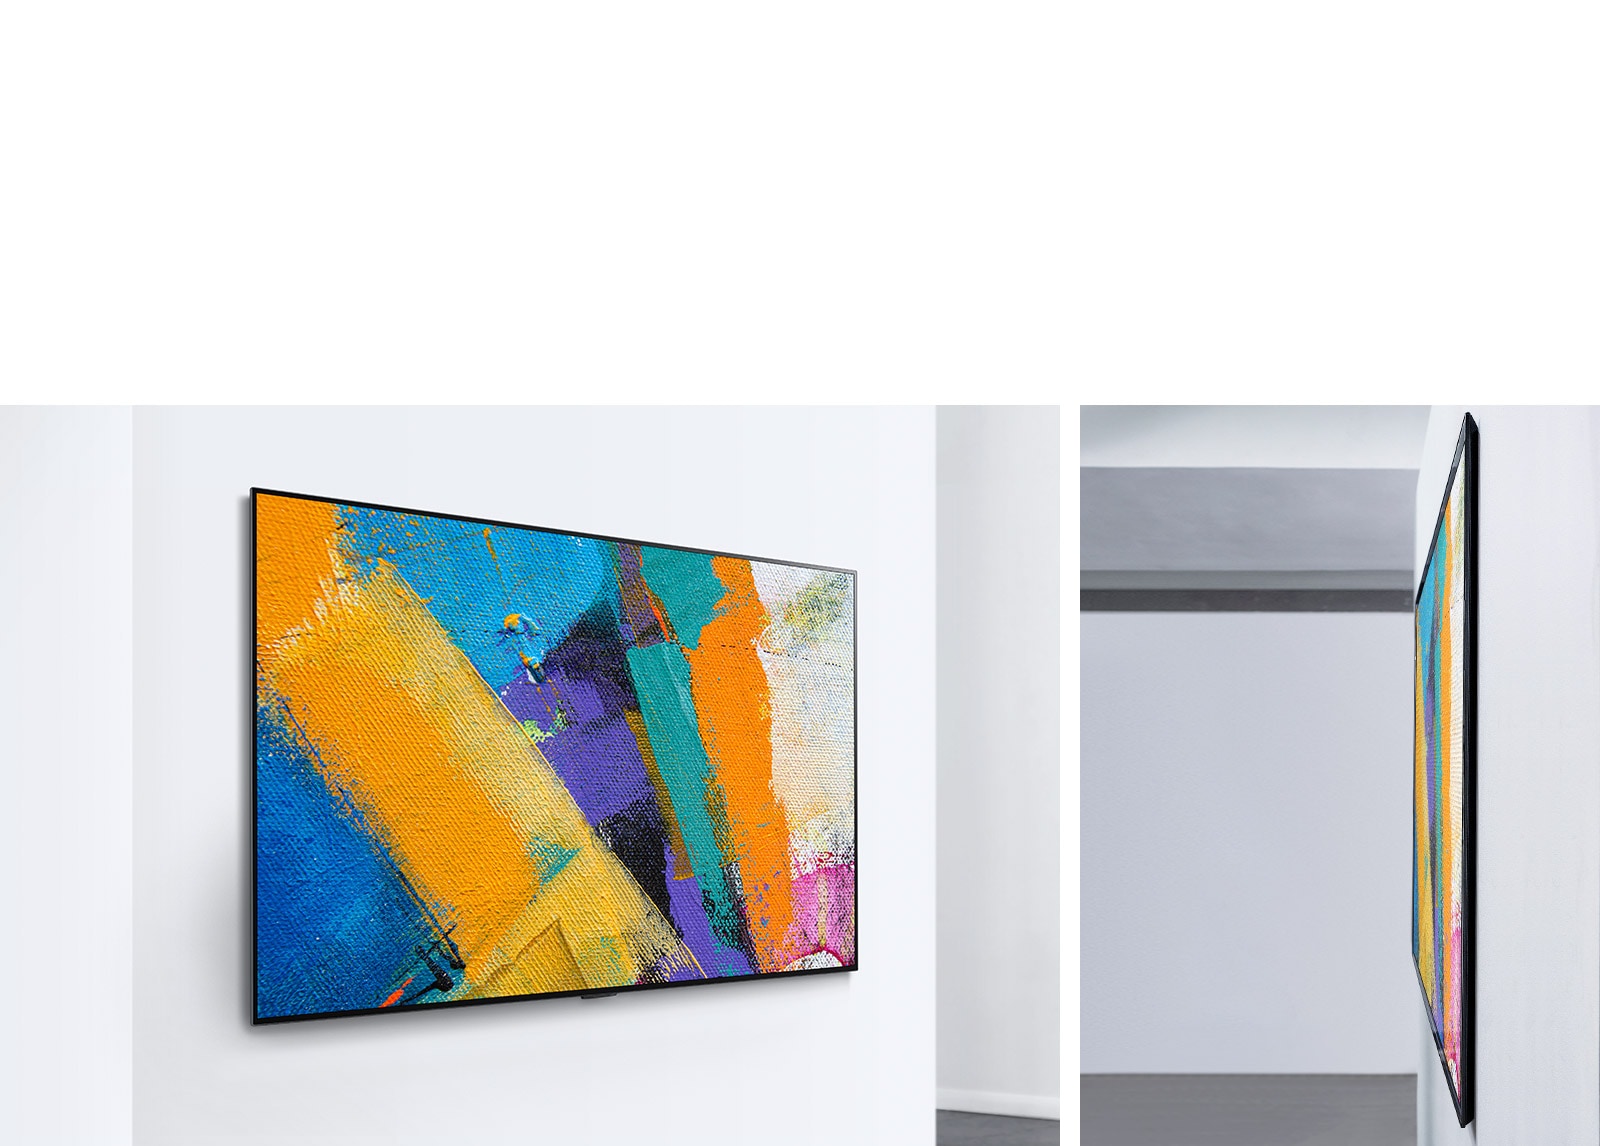 Two LG Gallery Design TVs showing artwork